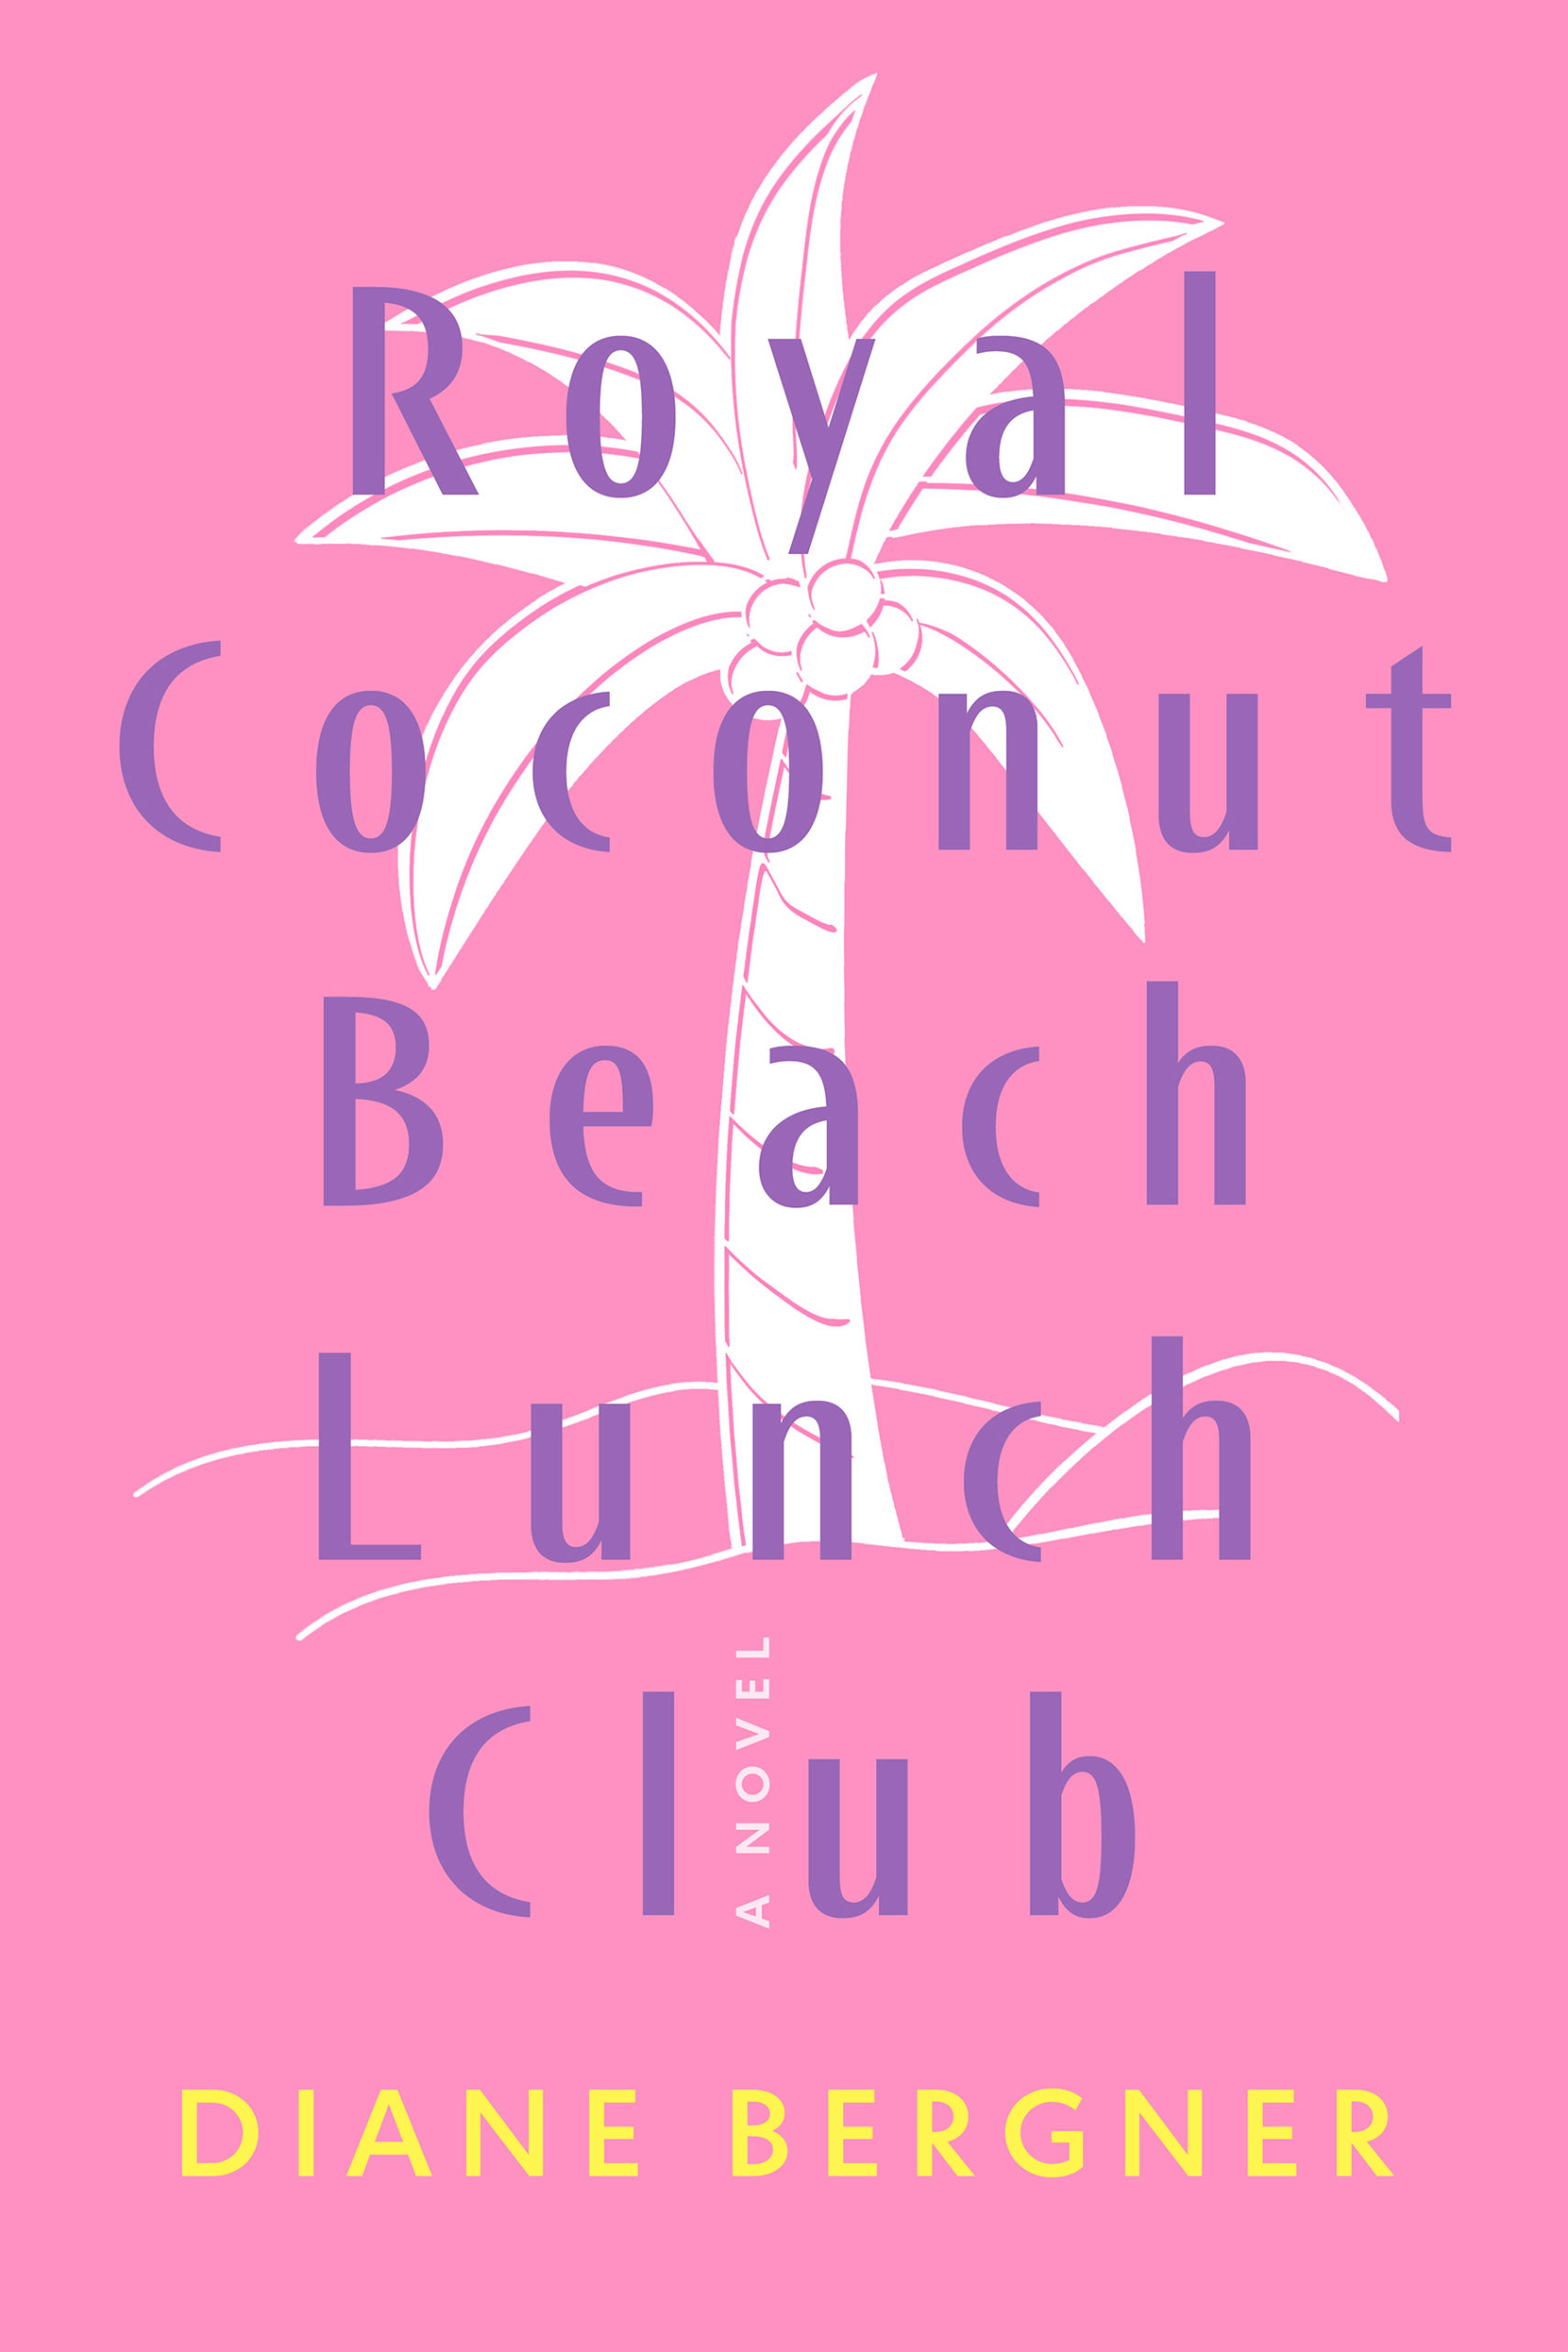 Royal Coconut Beach Lunch Club by Diane Bergner